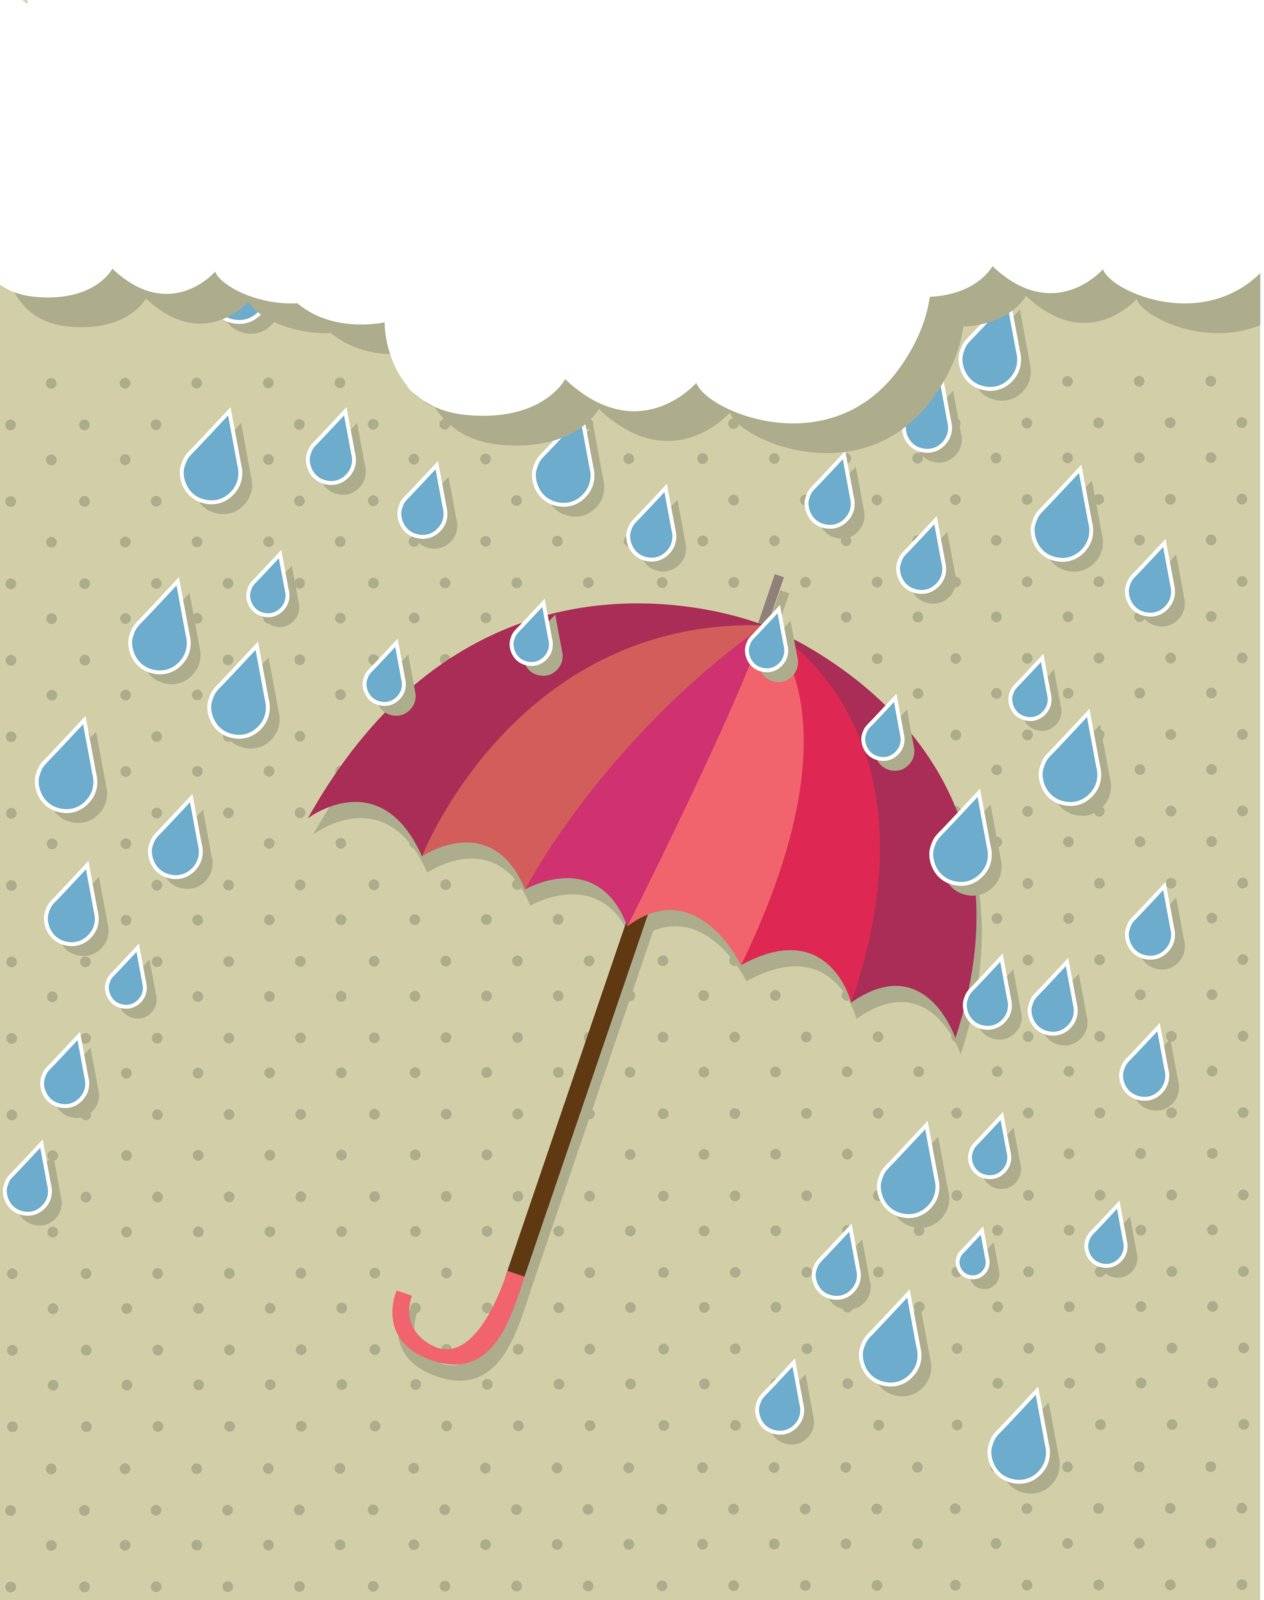 vinatage umbrella with rain and cloud. vector illustration